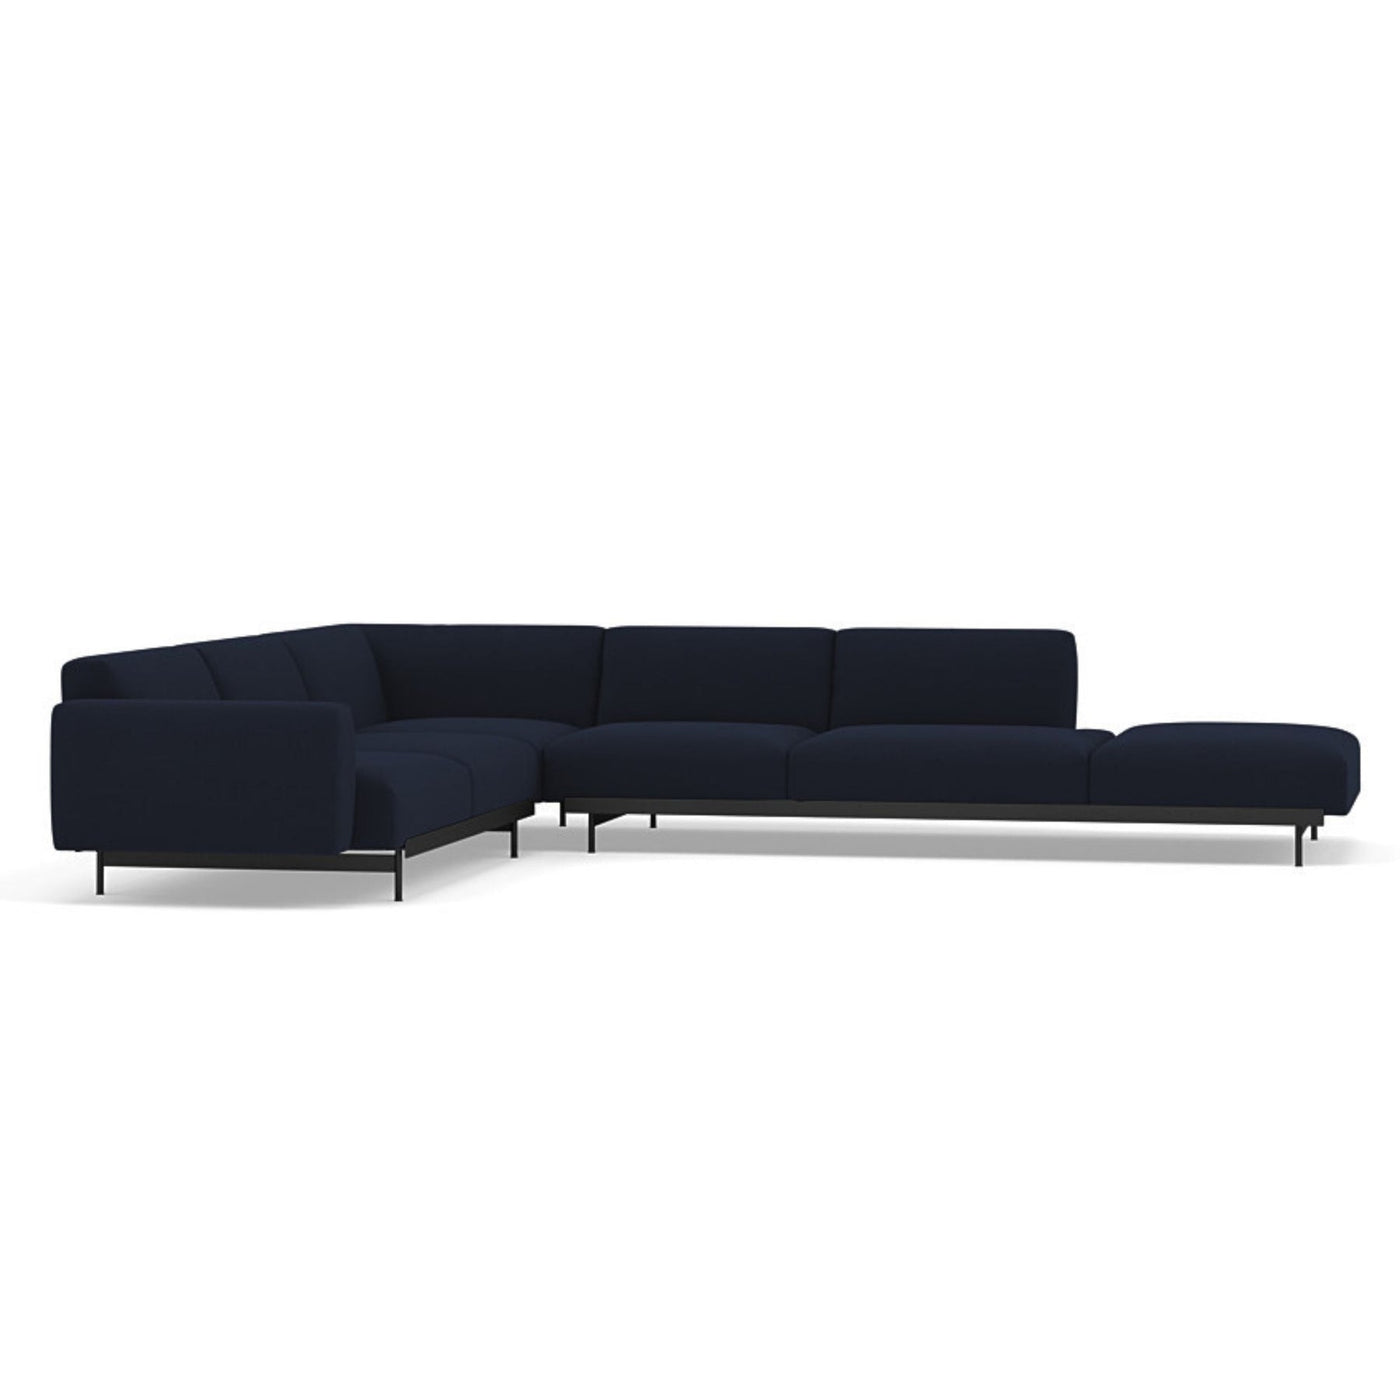 Muuto In Situ corner sofa, configuration 6 in vidar 554 fabric. Made to order from someday designs. #colour_vidar-554